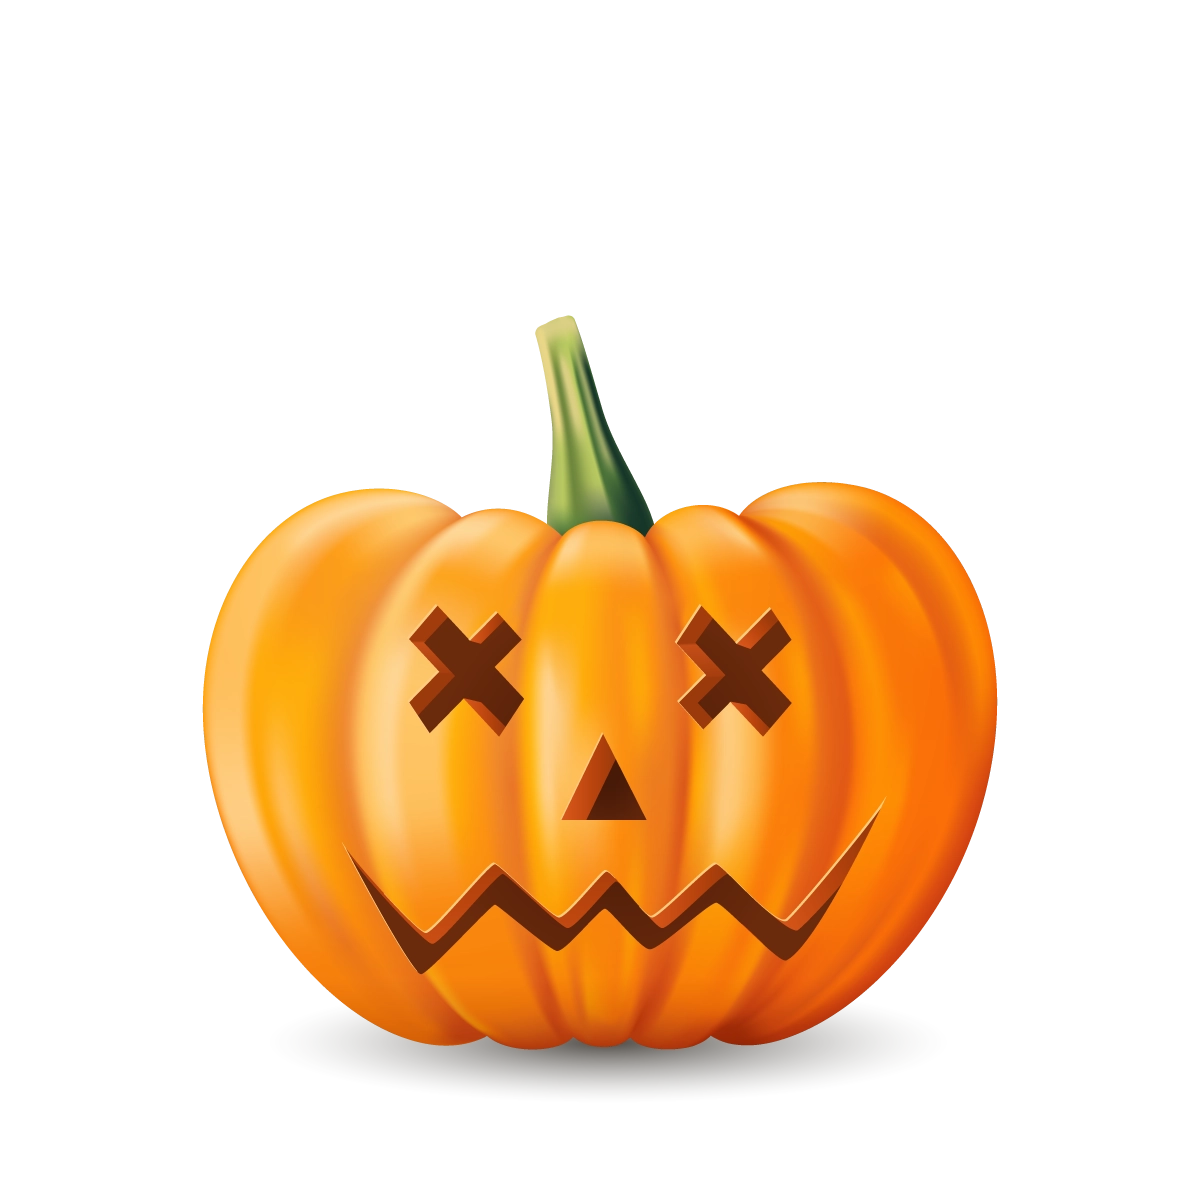 pumpkin normal state image